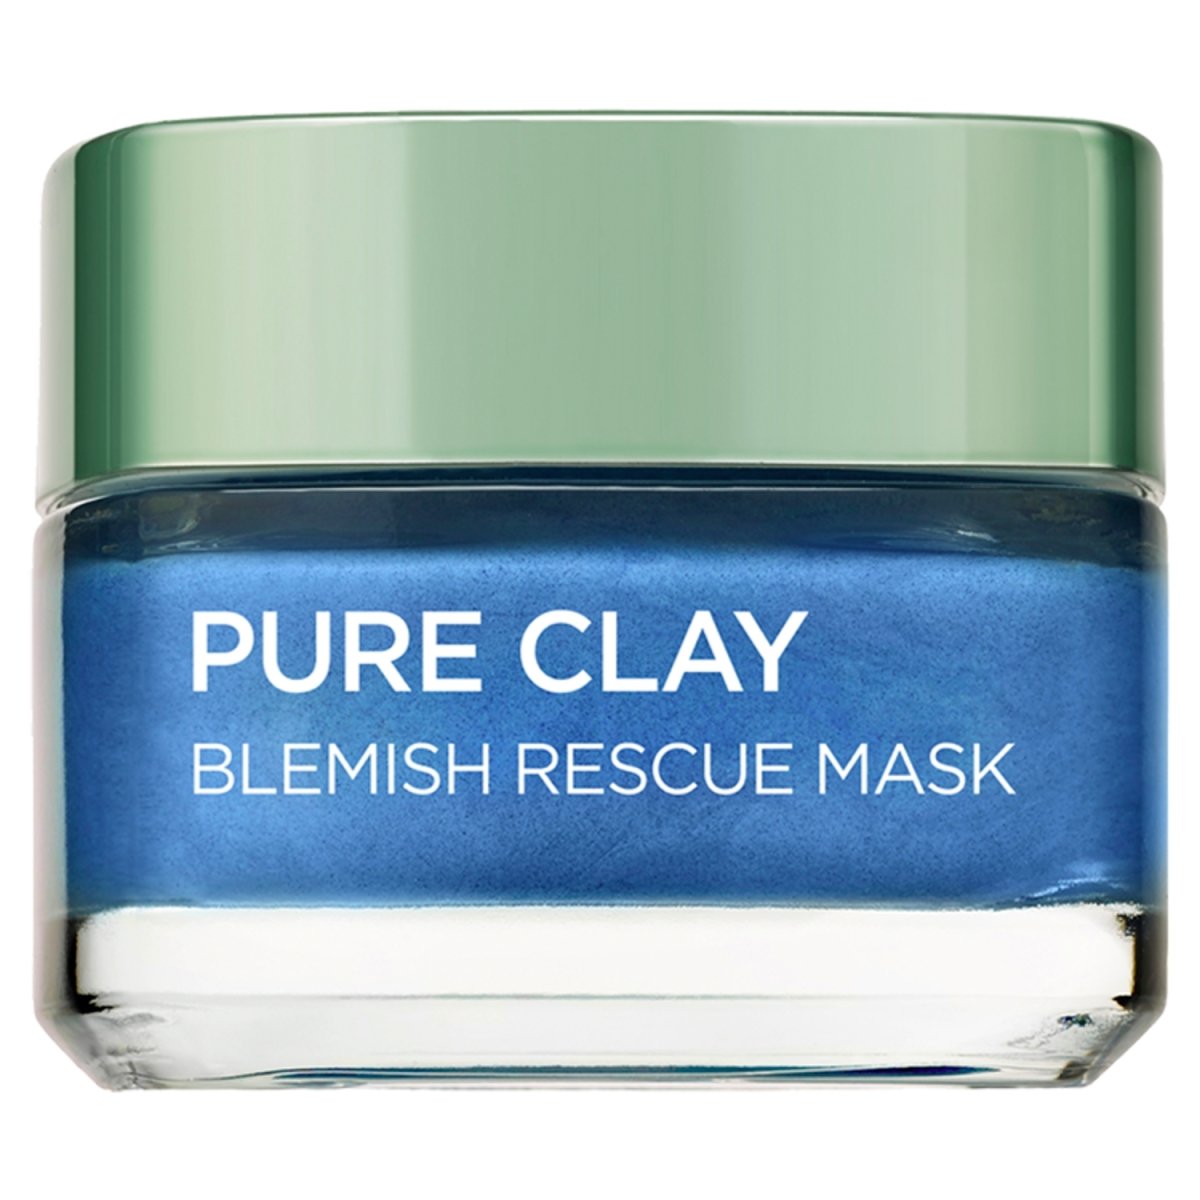 L'Oreal Pure Clay Blemish Rescue 50ml - Intamarque 3600523516919